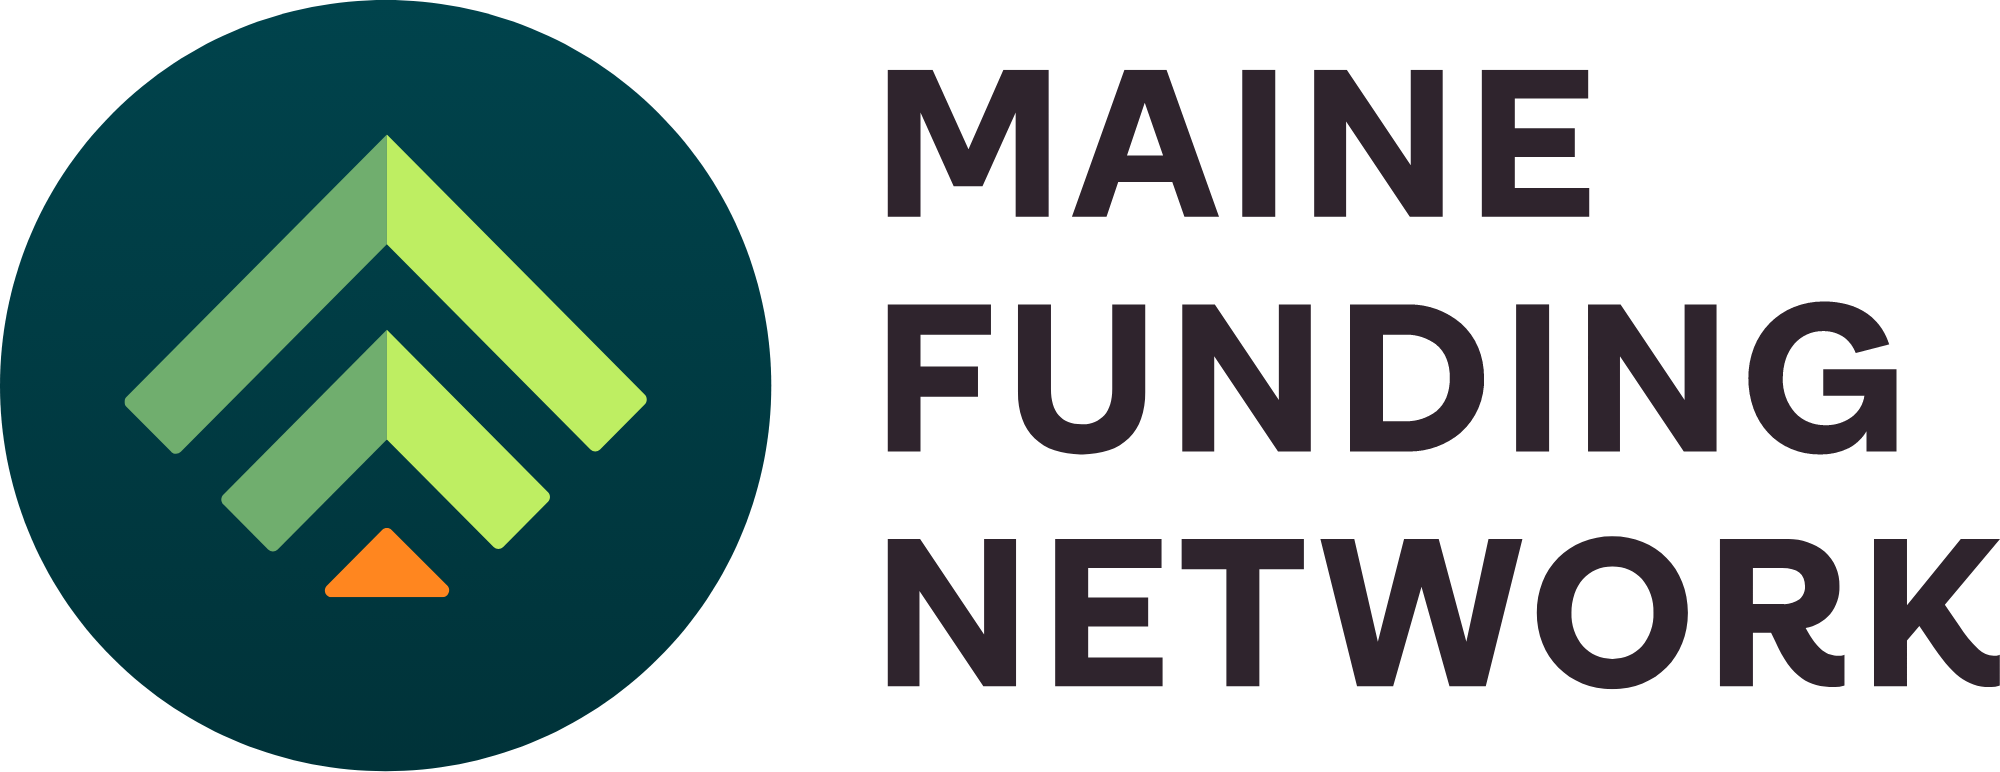 Maine Funding Network logo stacked